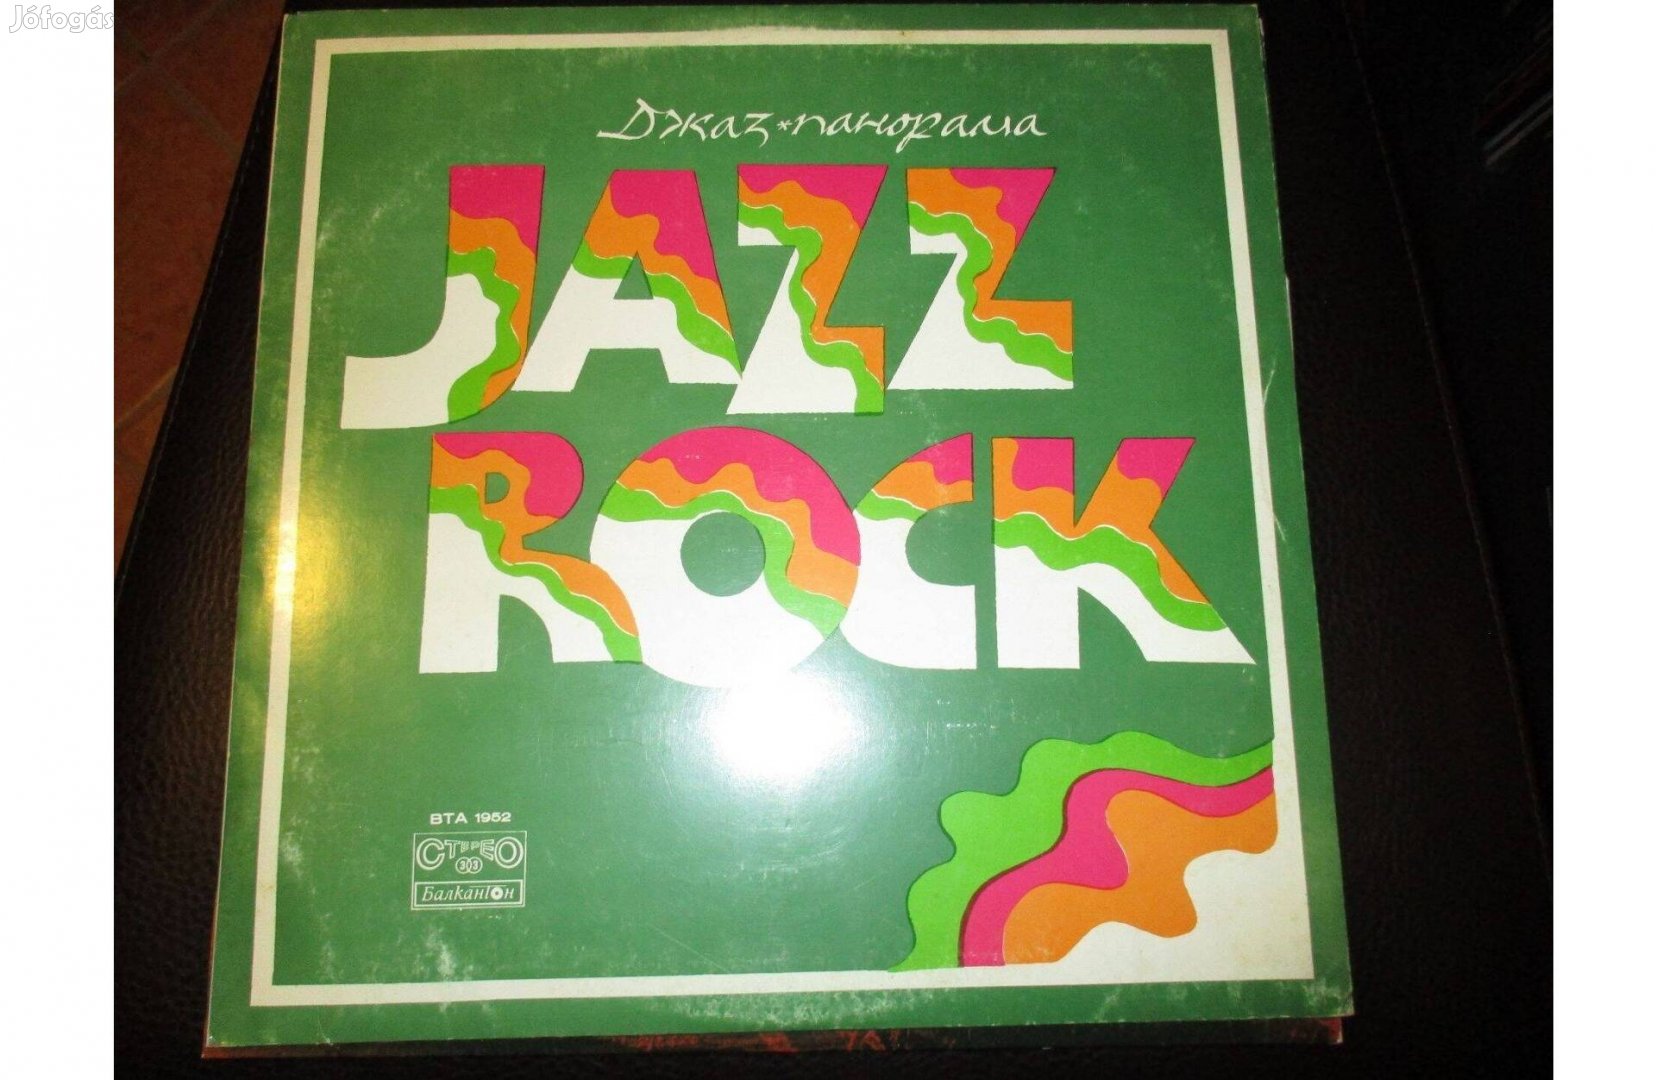 Jazz Rock bakelit hanglemez eladó